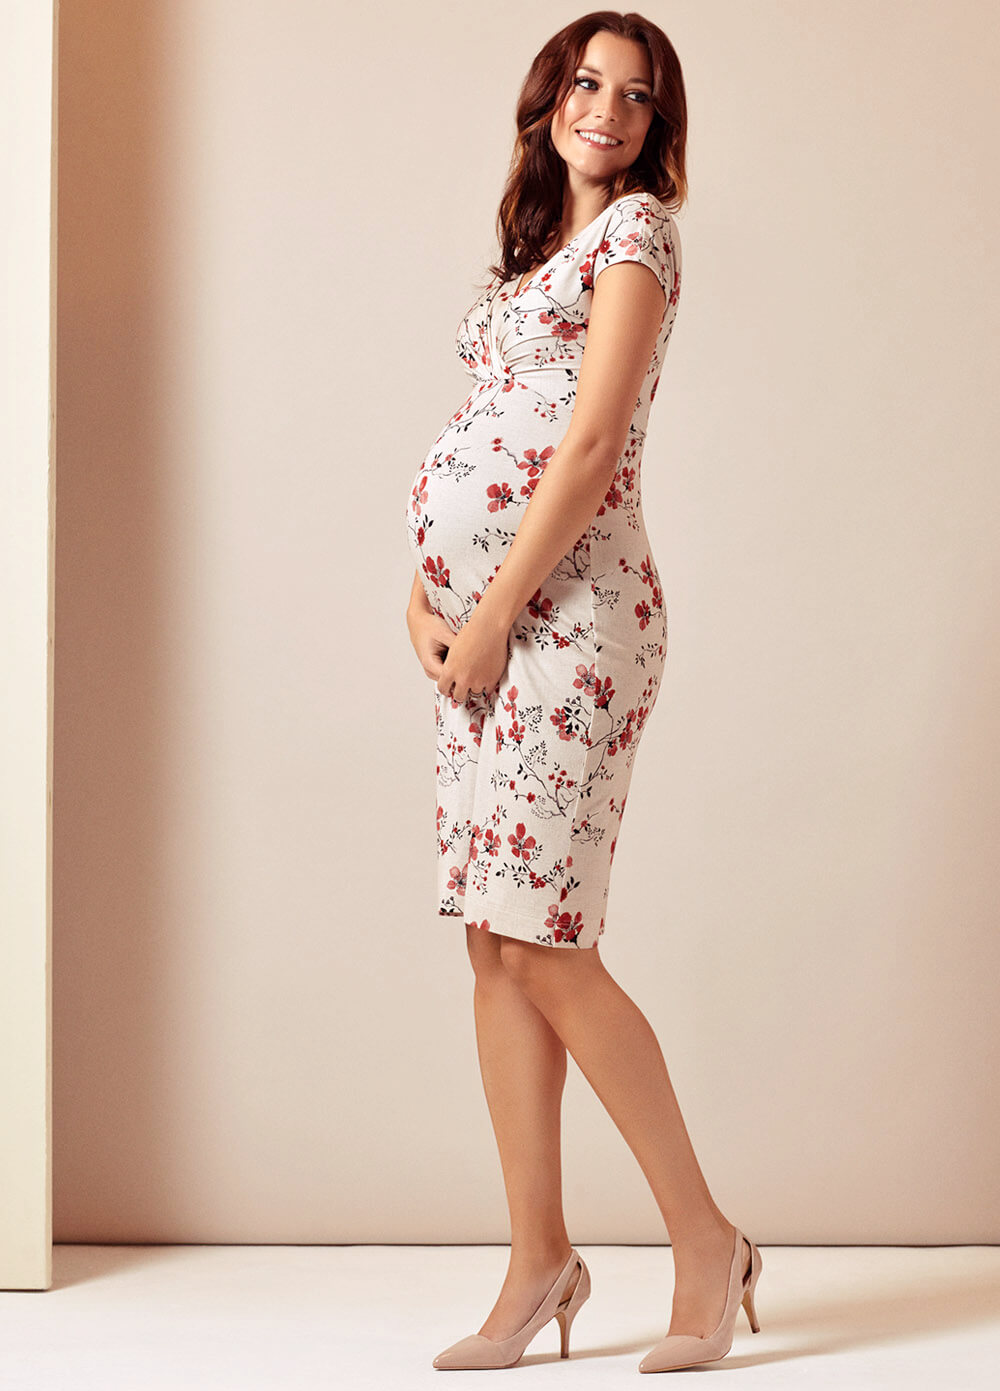 Bardot Maternity Dress in Cherry Blossom Red by Tiffany Rose